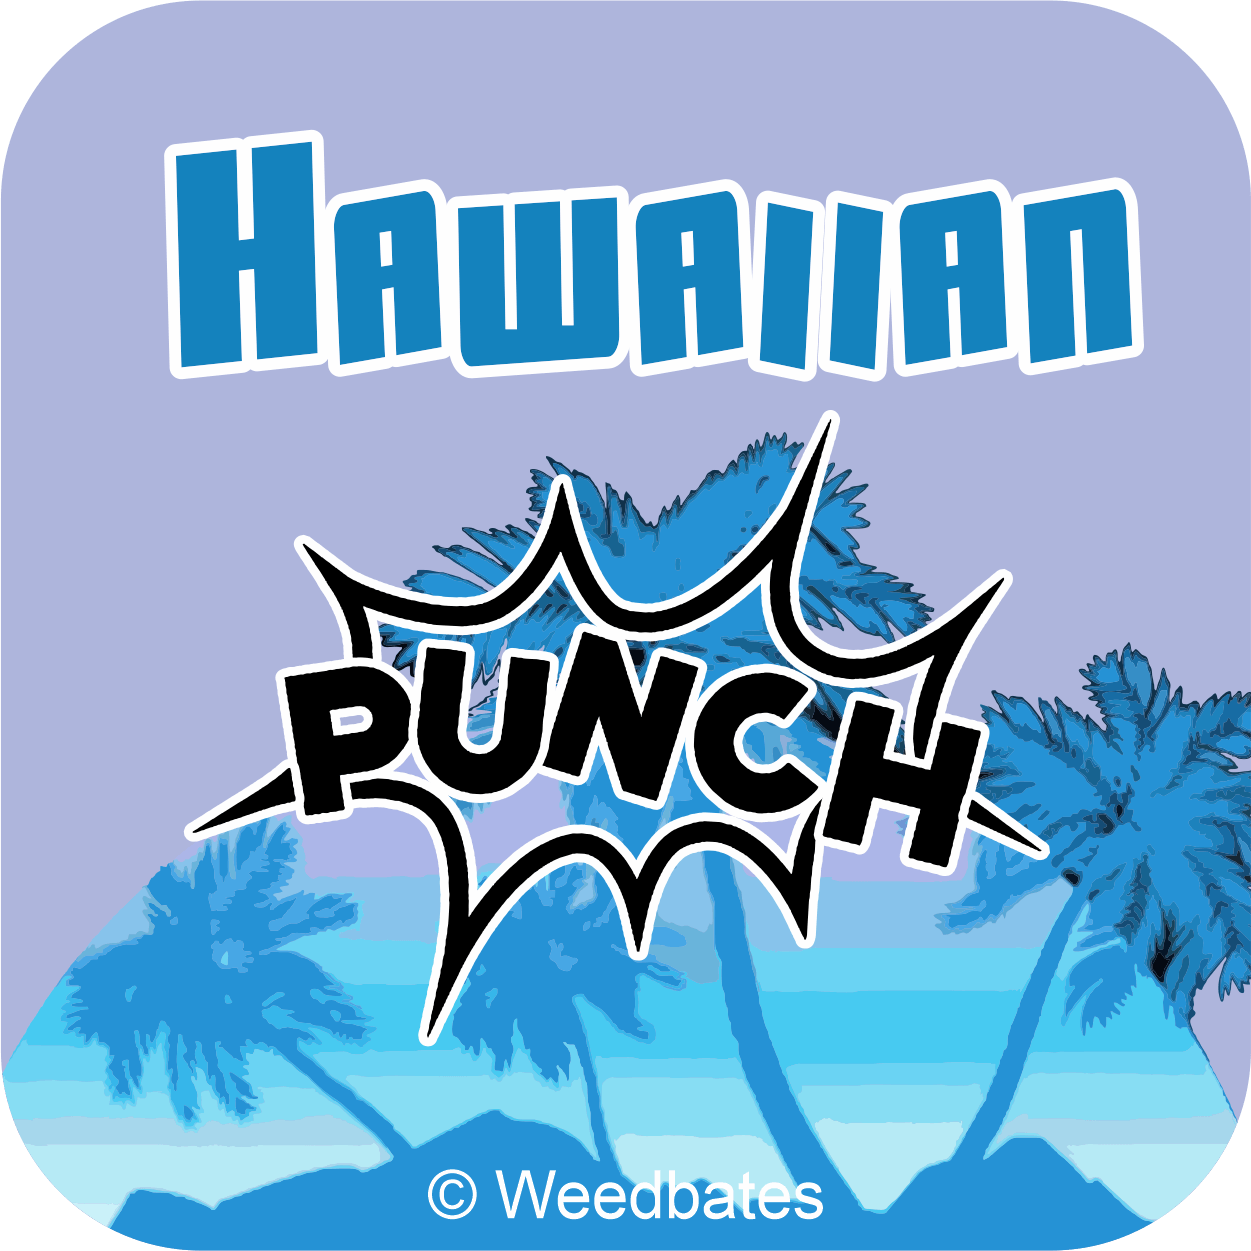 Hawaiian Punch cannabis strain